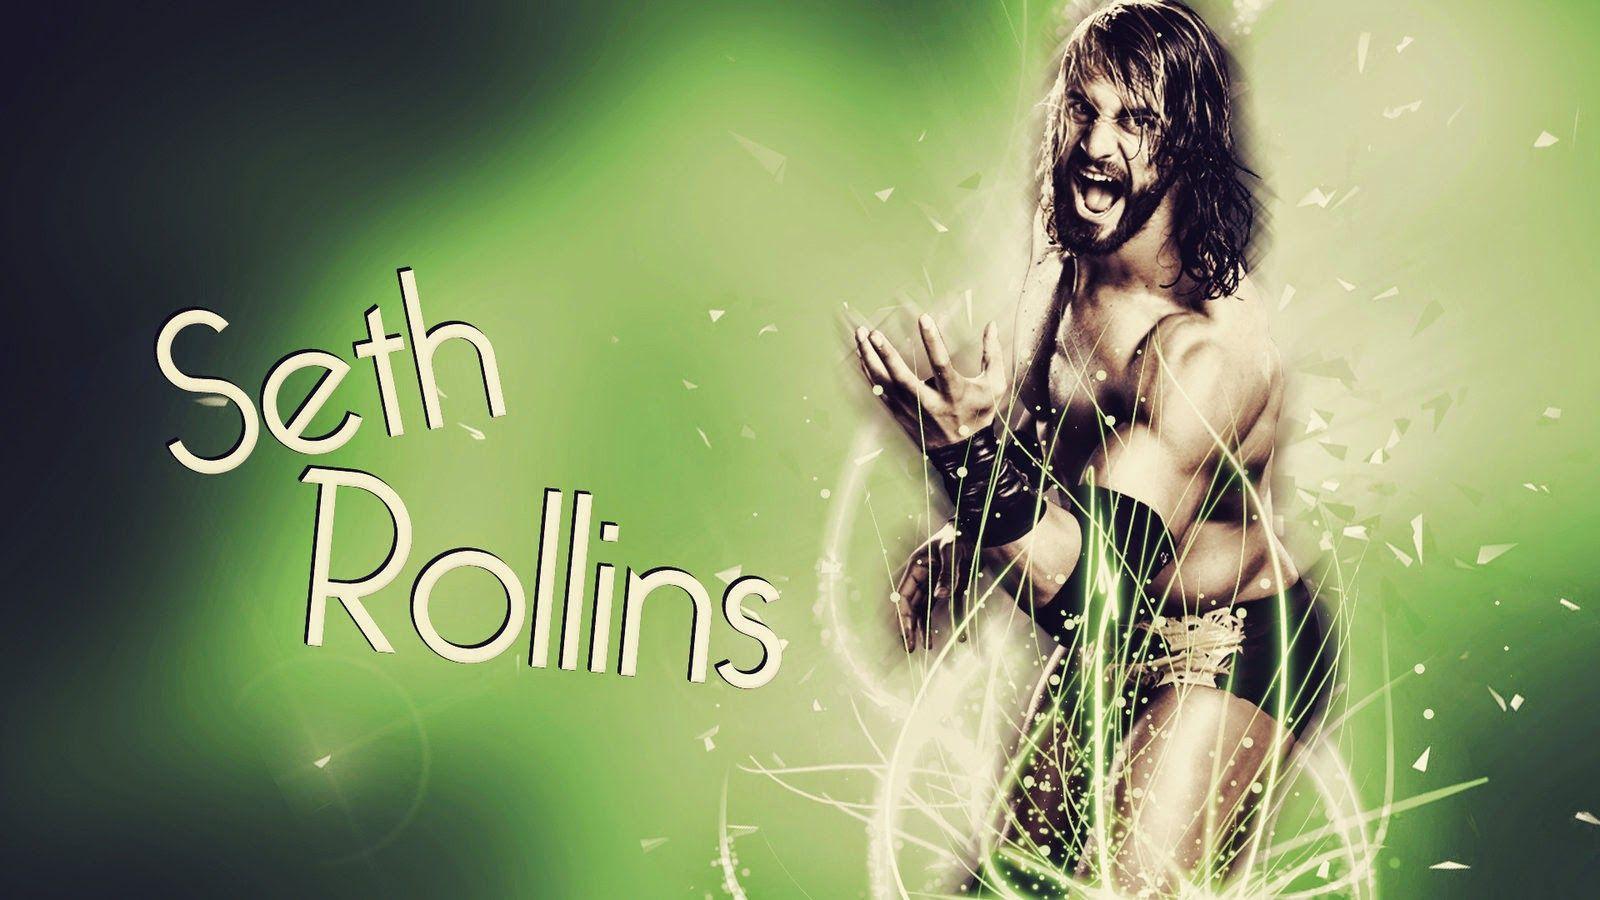 Seth Rollins HD Wallpaper. Free Download WWE Superstars HD